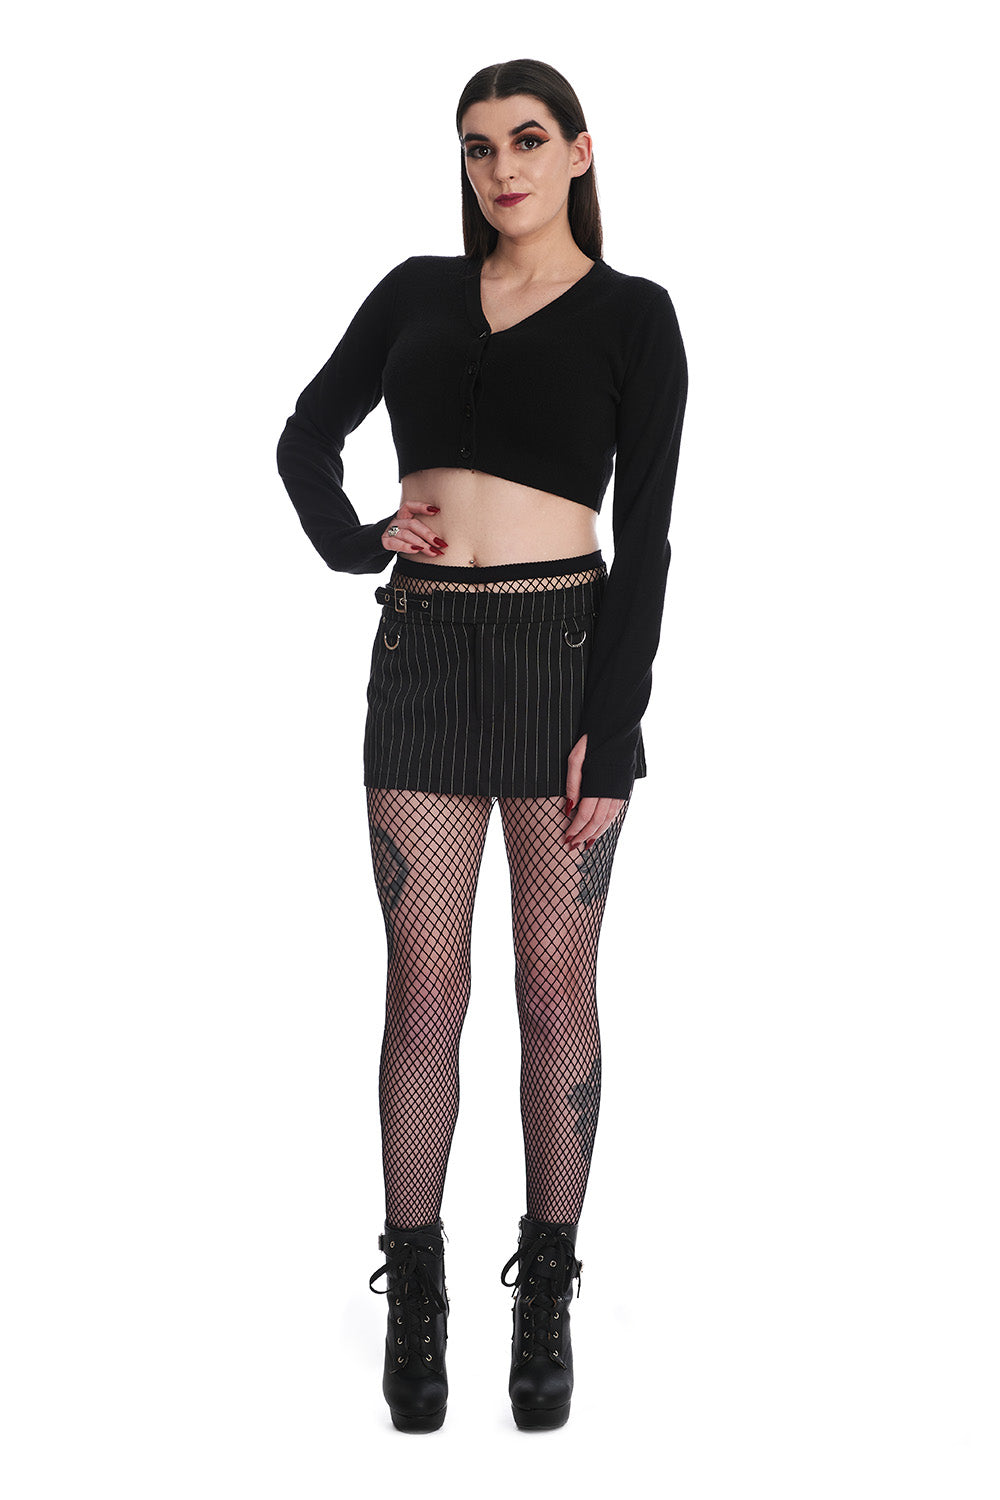 Banned Apparel Darina Pinstripe Mini skirt